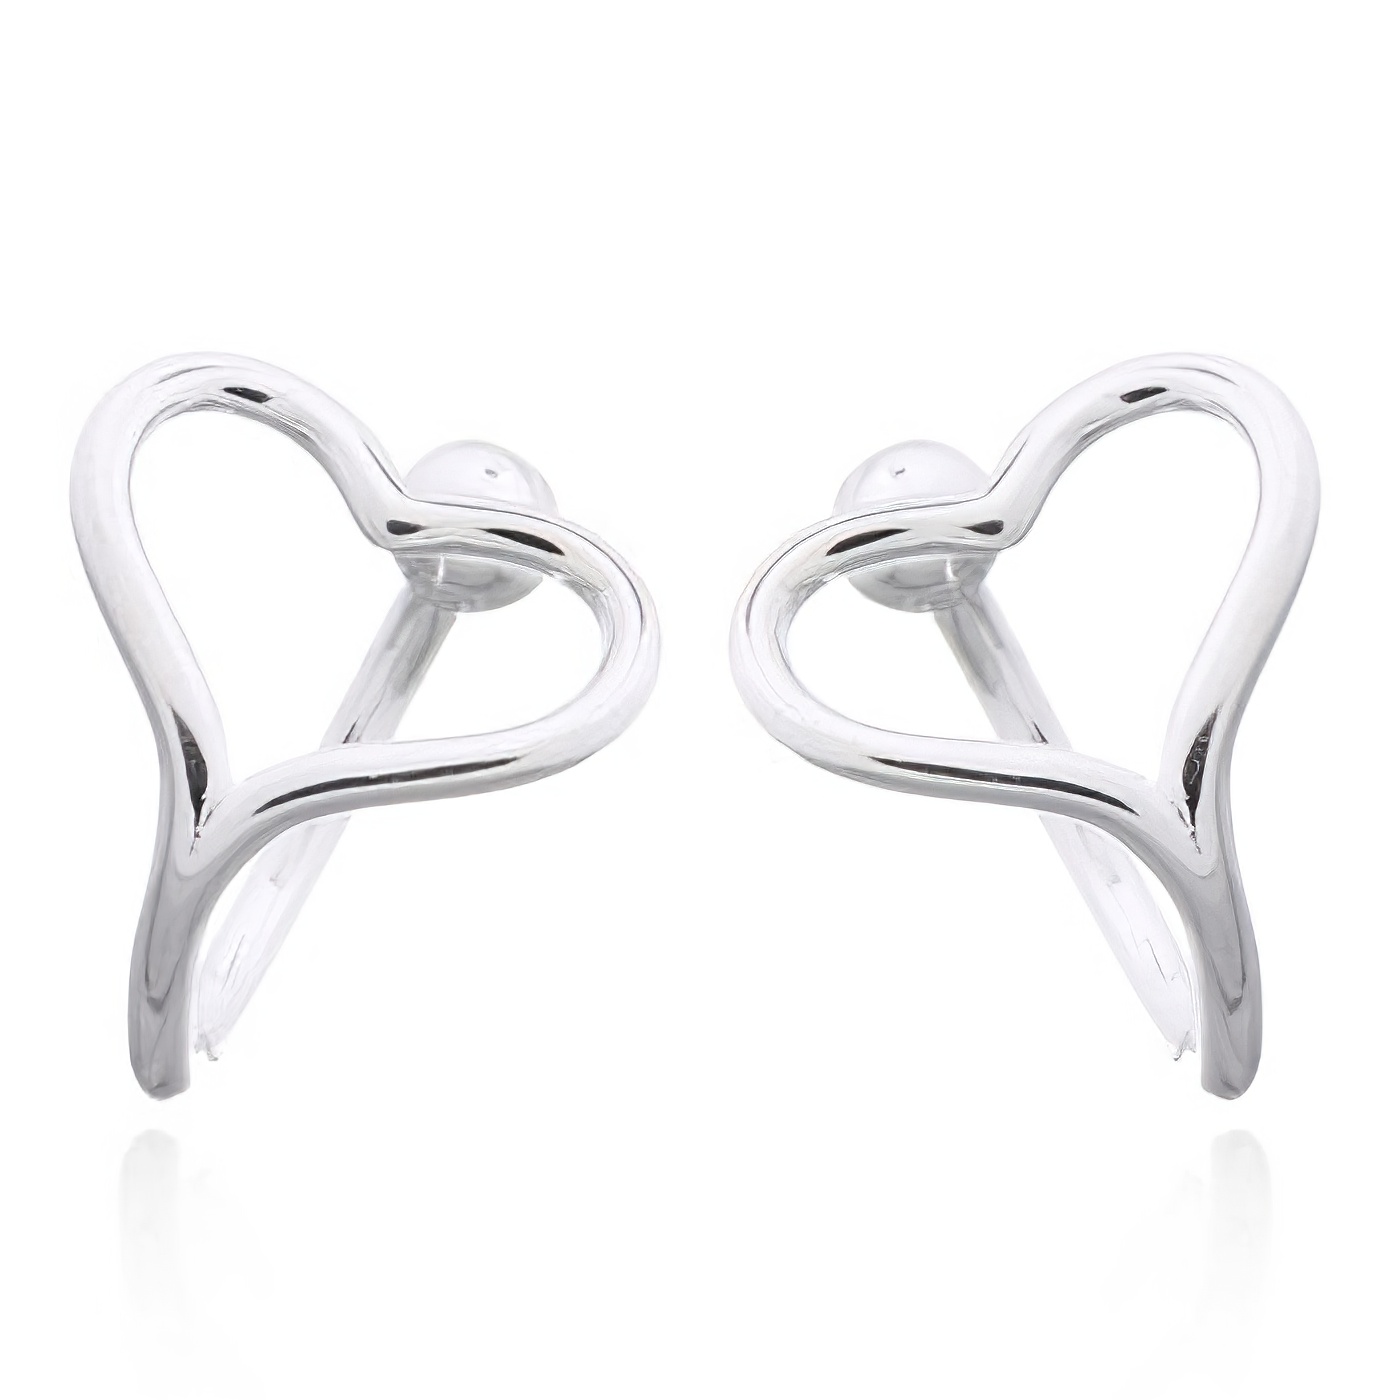 Stylish Lovely Heart 925 Silver Cuff Earrings by BeYindi 